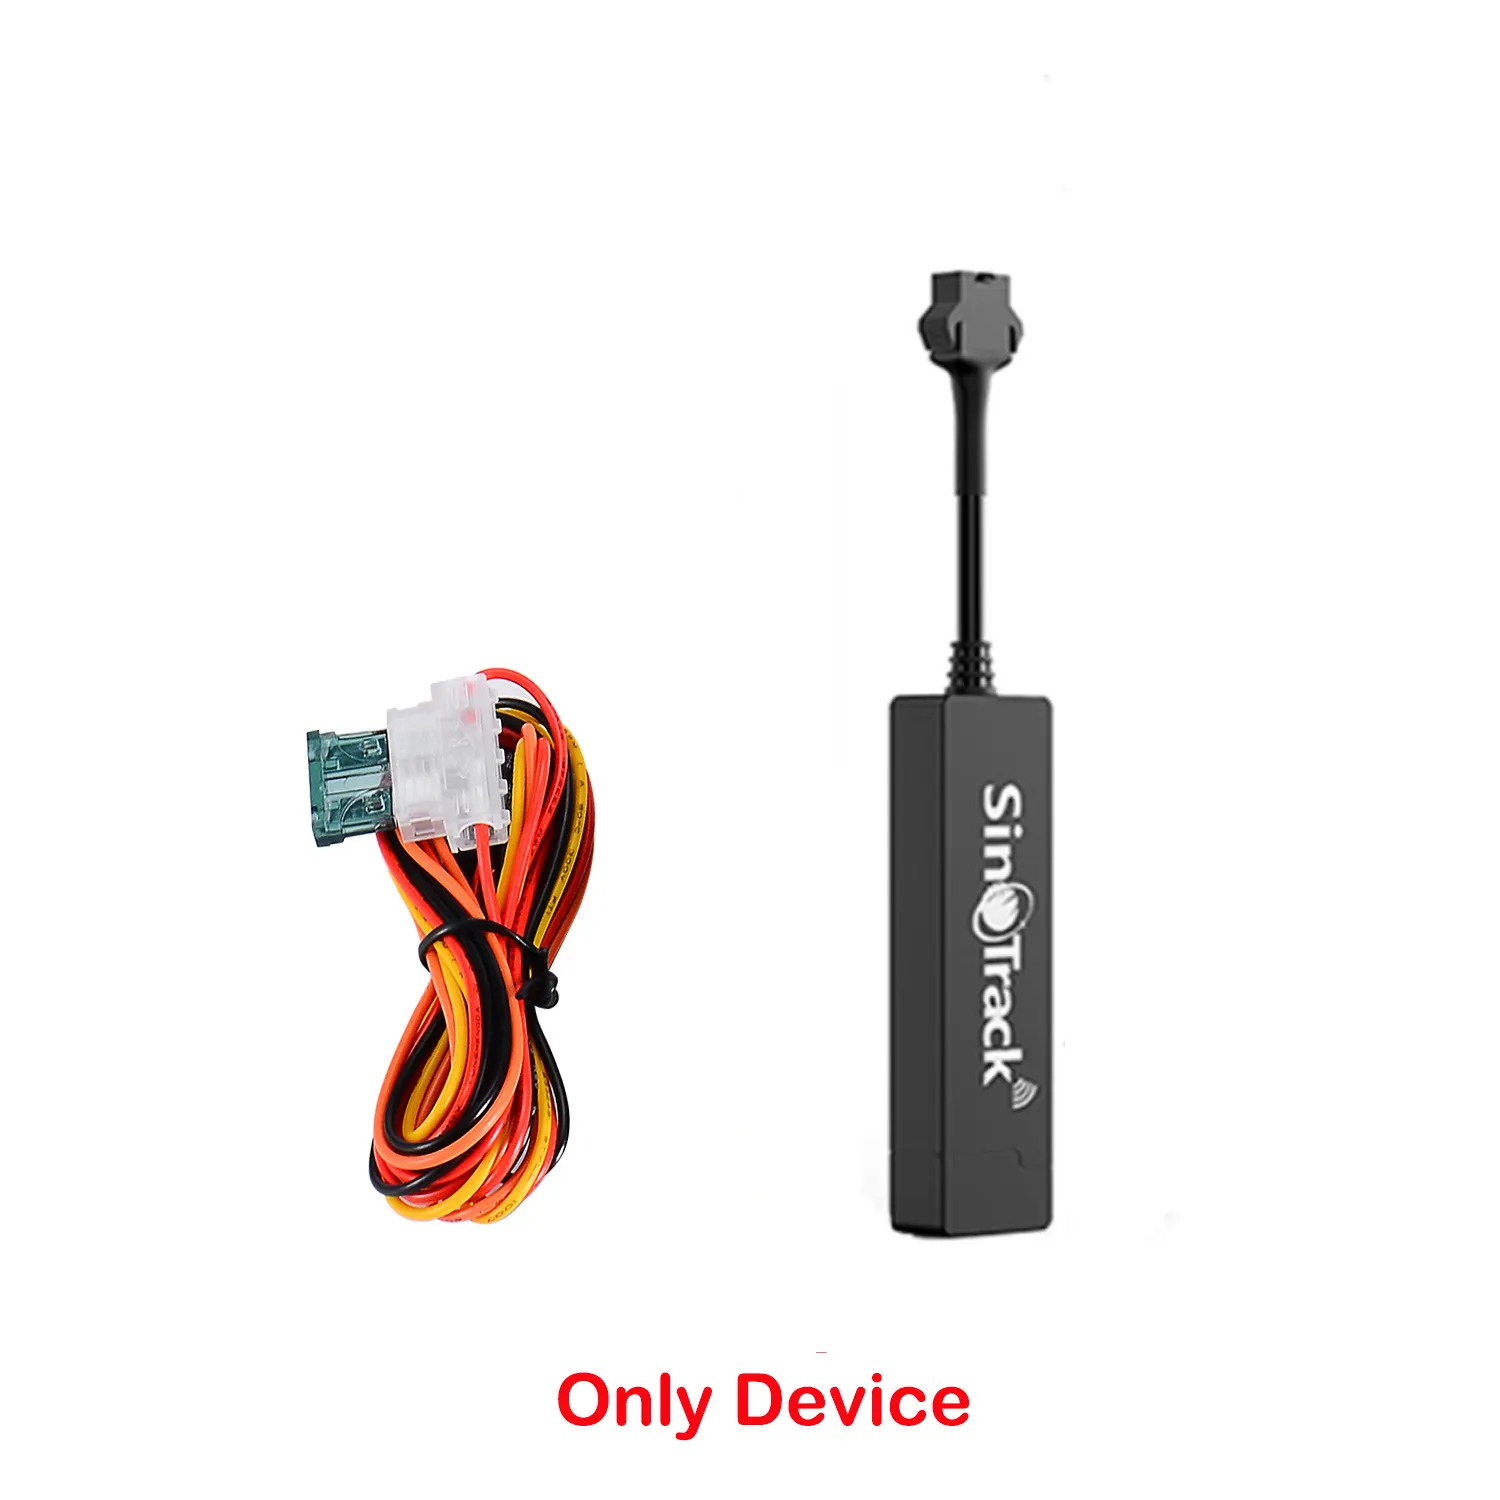 SinoTrack مصغرة جهاز تتبع GPS APP التحكم عن بعد لمكافحة خسر GSM جي بي آر إس محدد ST-901A لتحديد المواقع المقتفي للسيارات